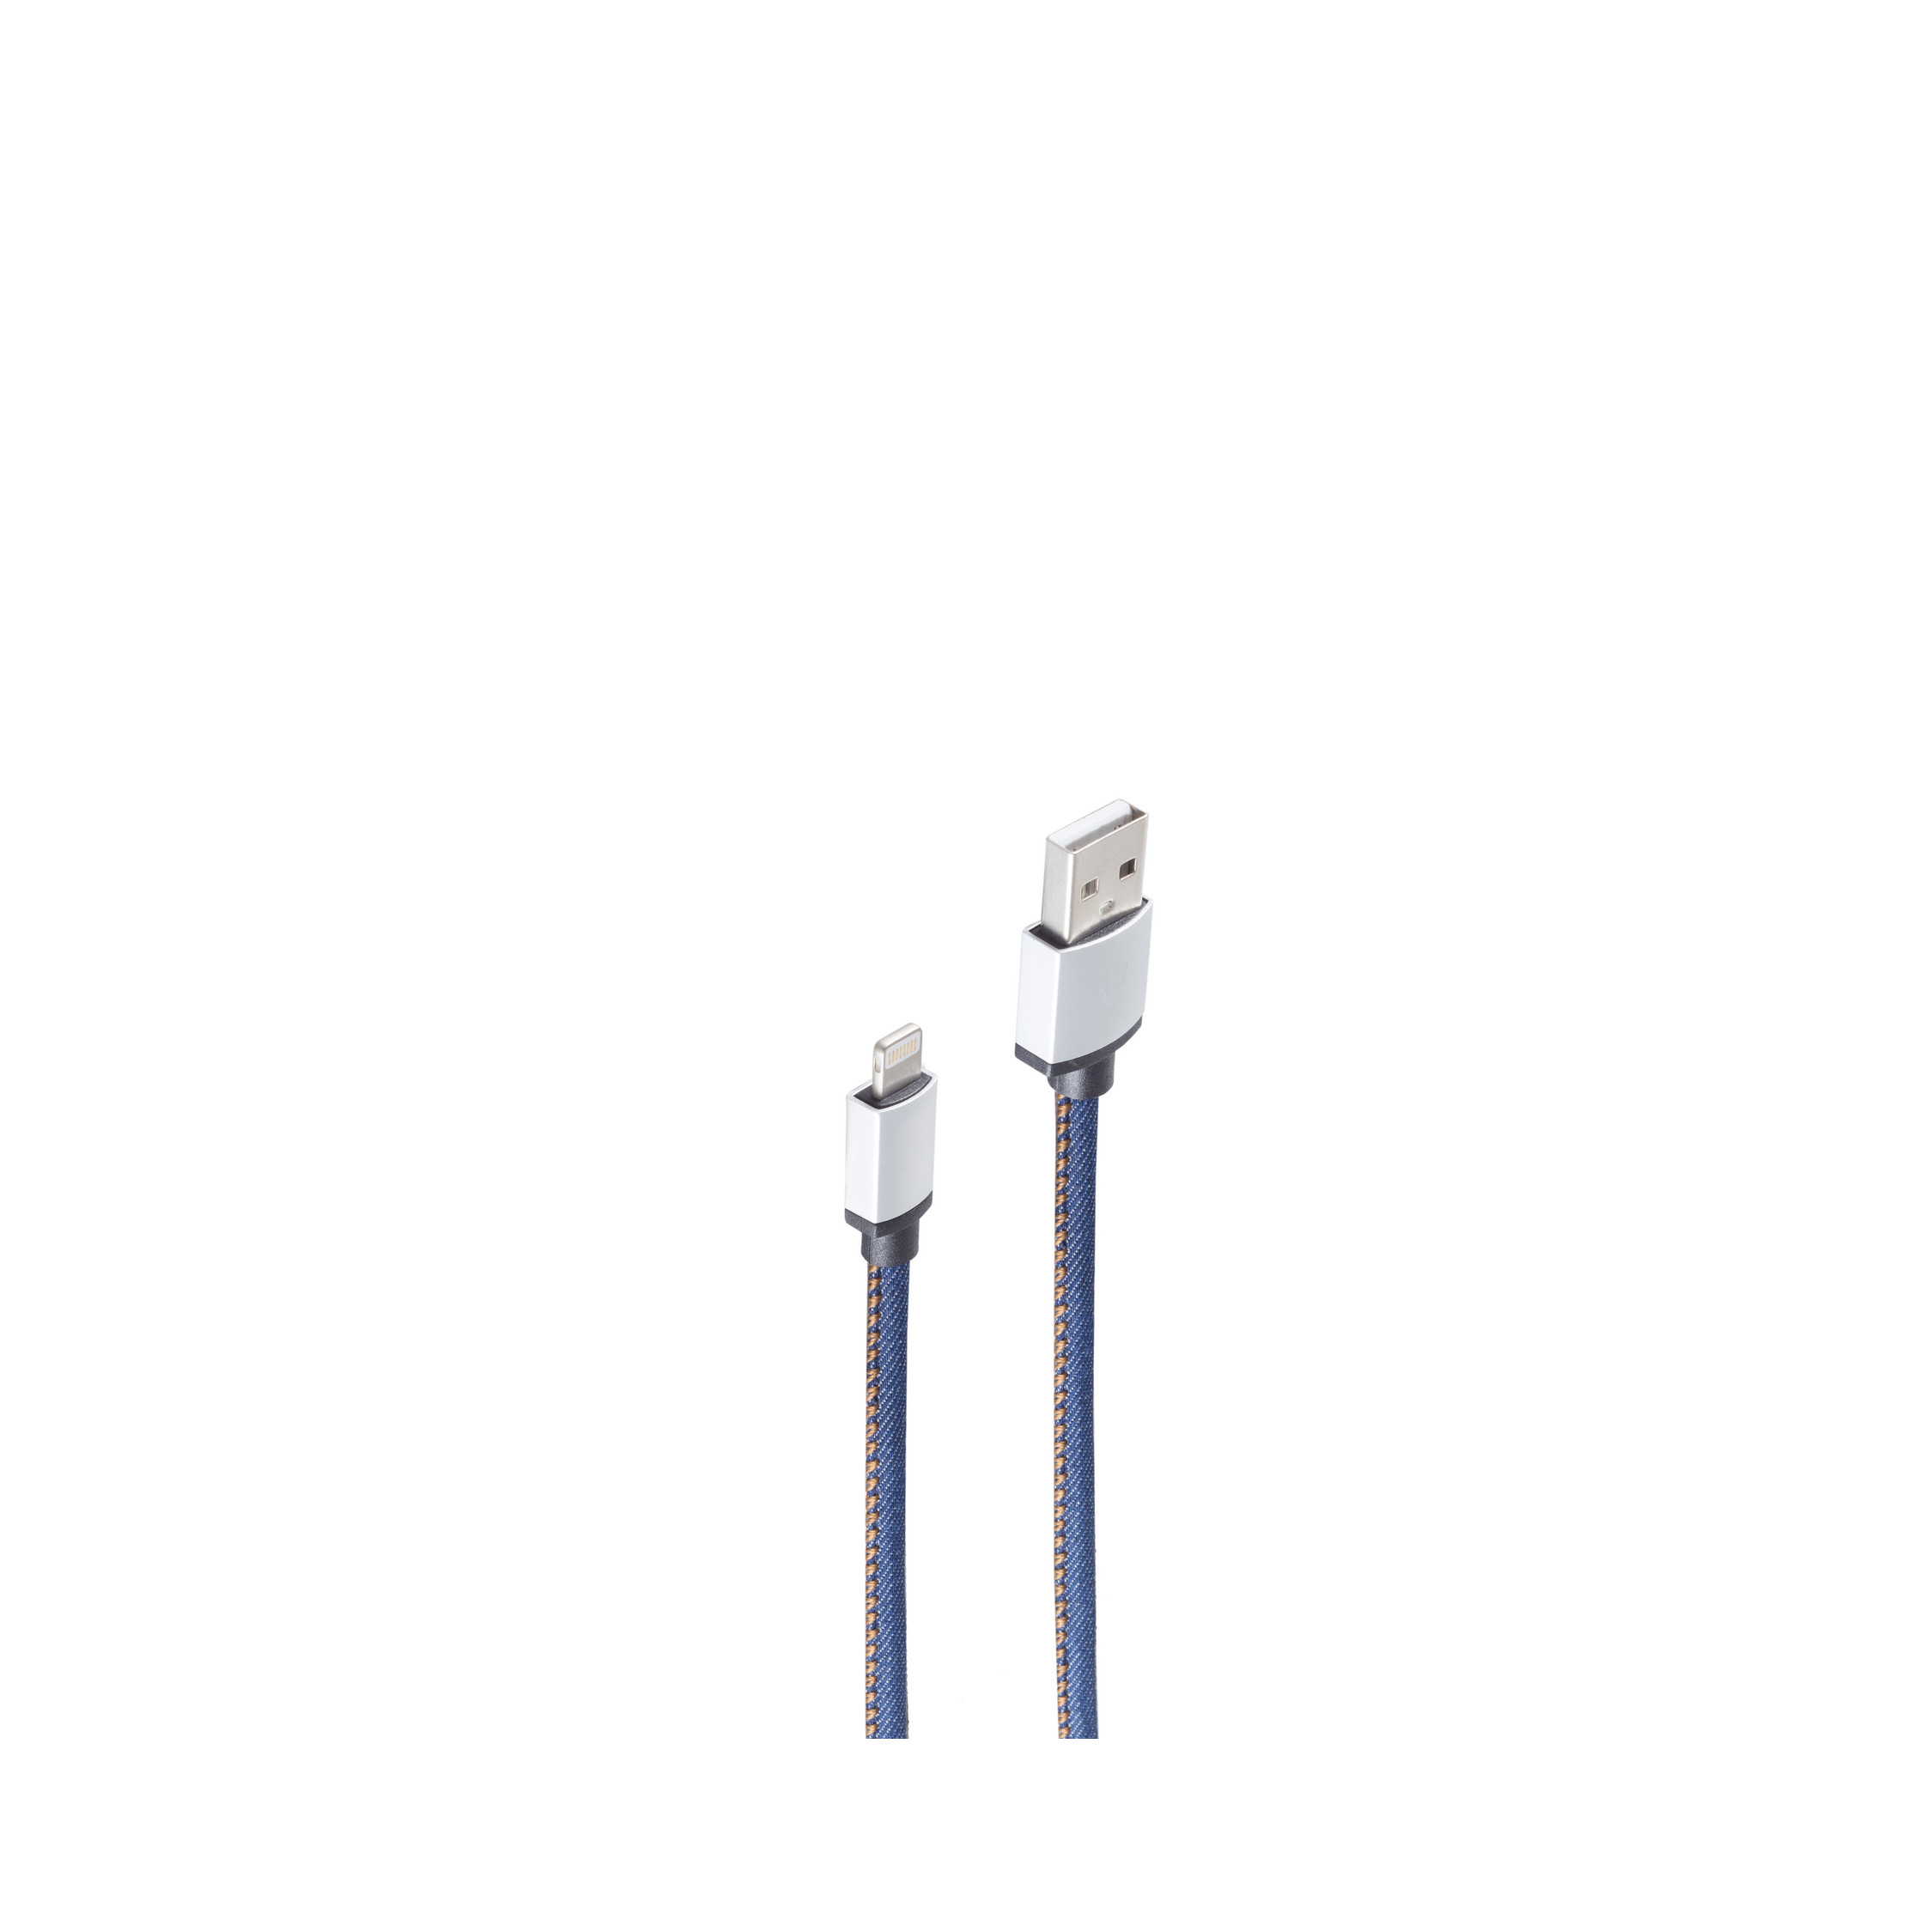 SHIVERPEAKS Ladekabel, A blau 2m, 2 USB-Ladekabel Stecker, USB blau auf Stecker 8-pin m,